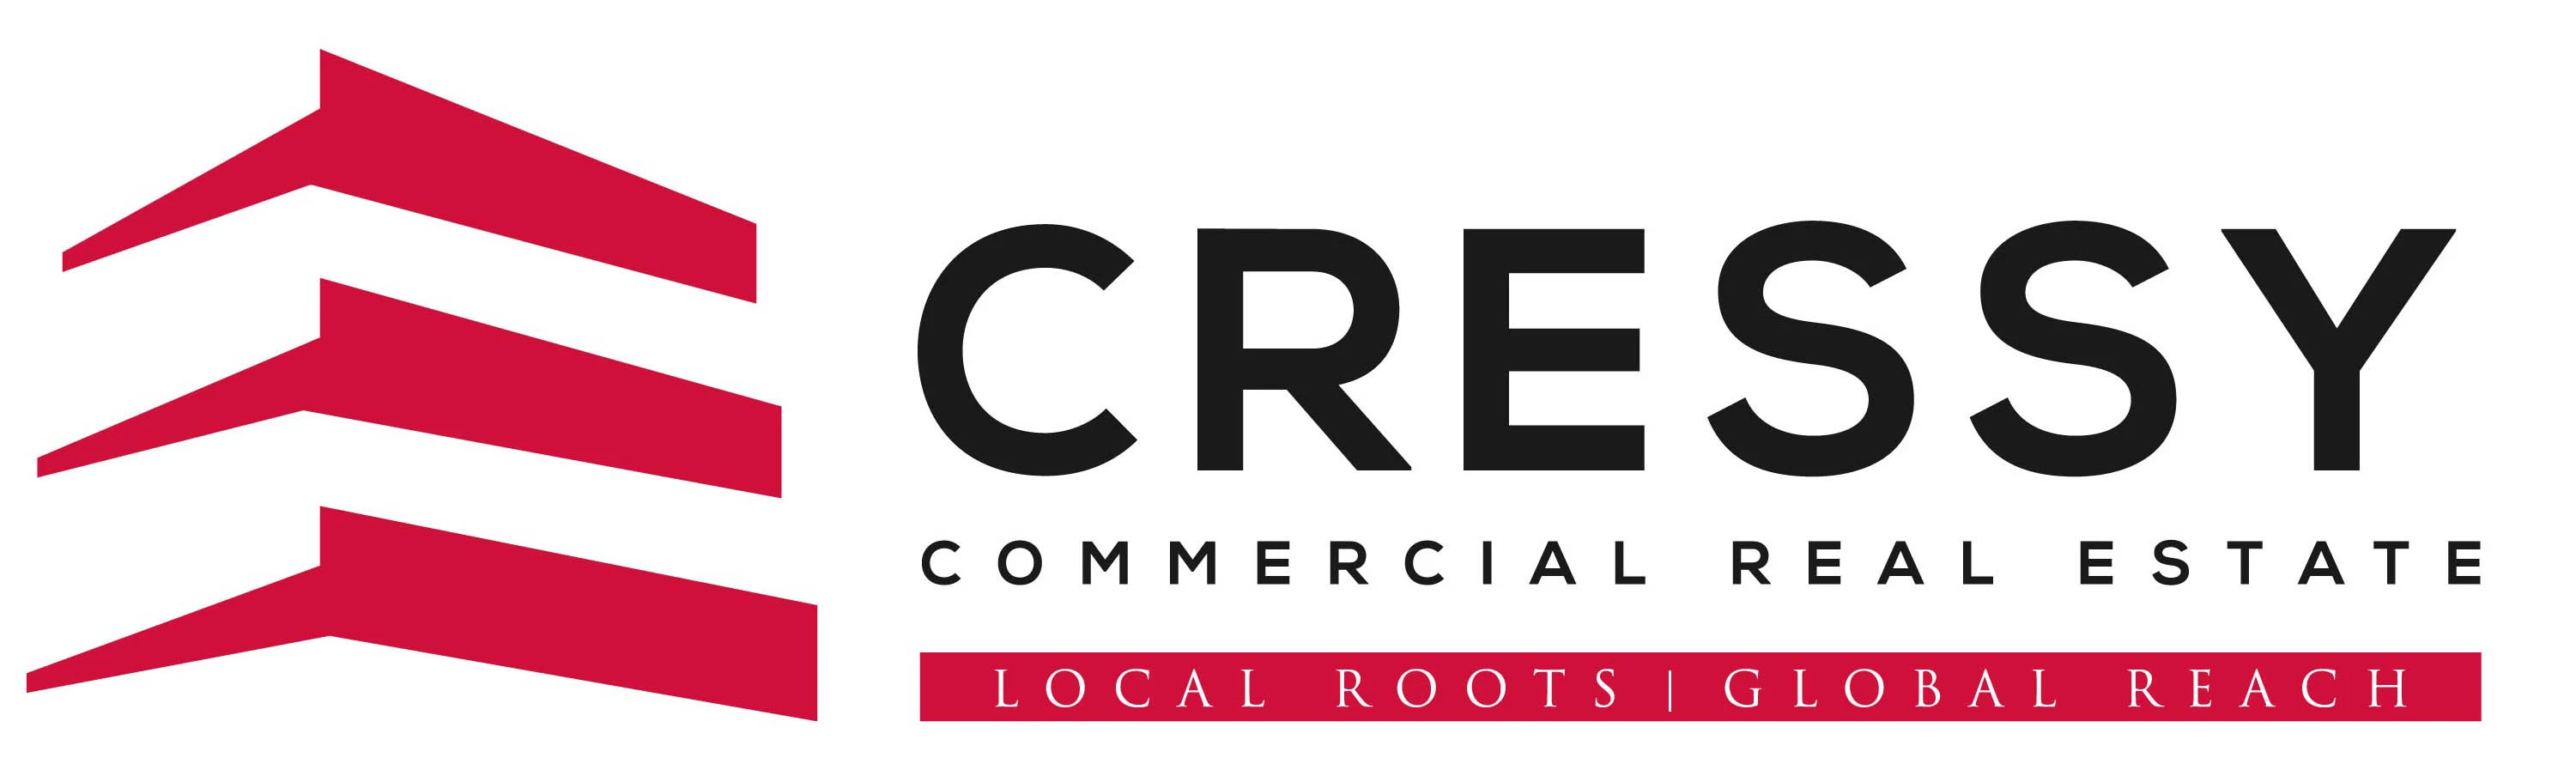 cressy-logo